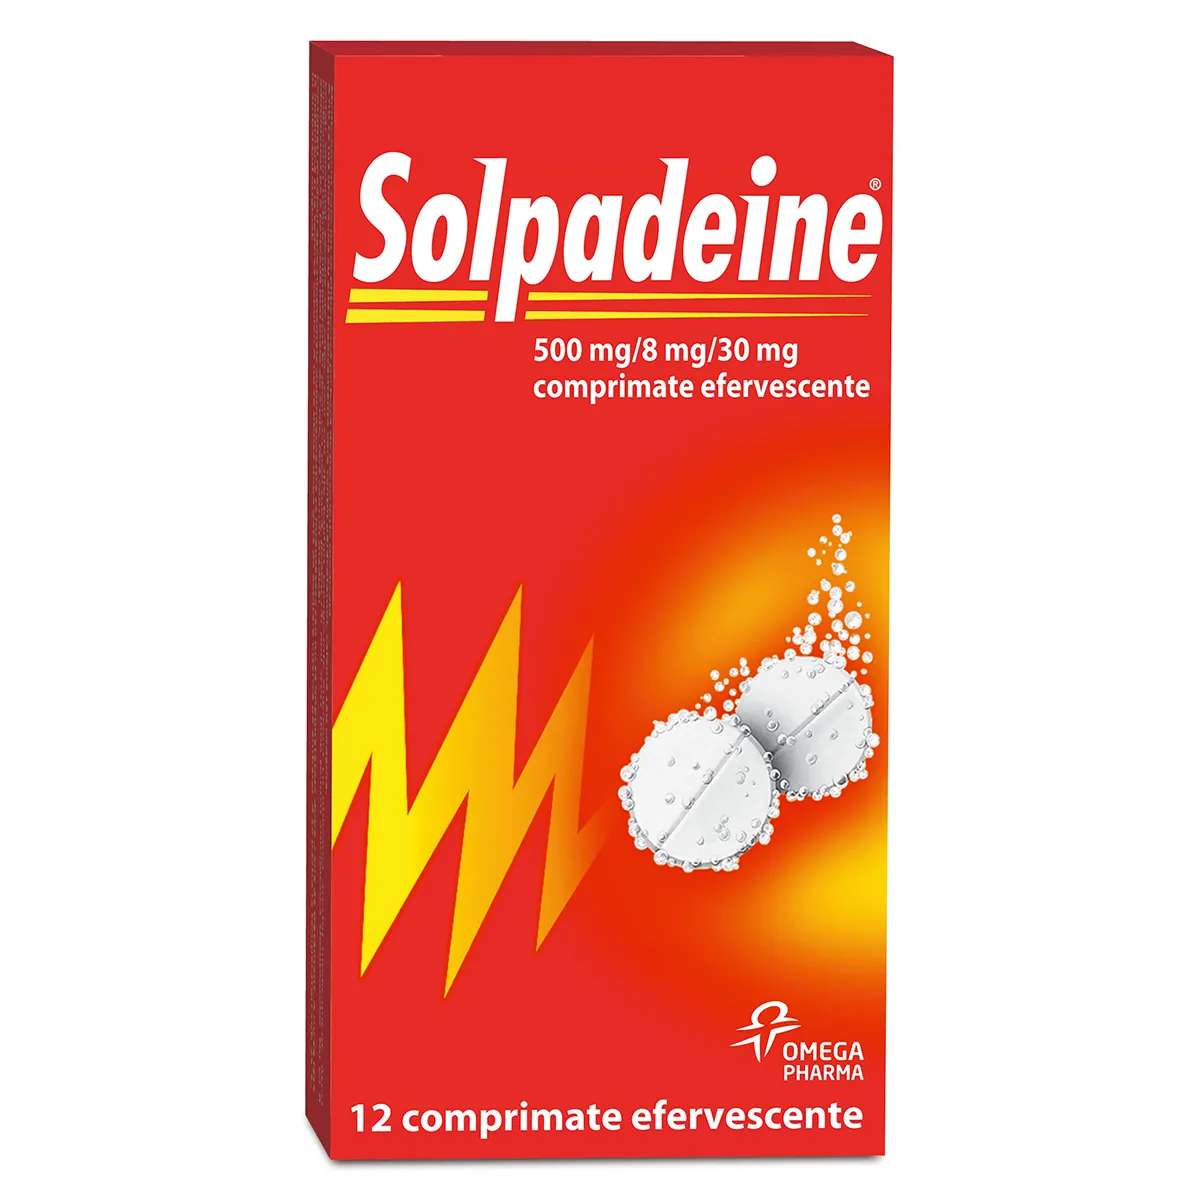 SOLPADEINE 500 mg/8 mg/30 mg x 12